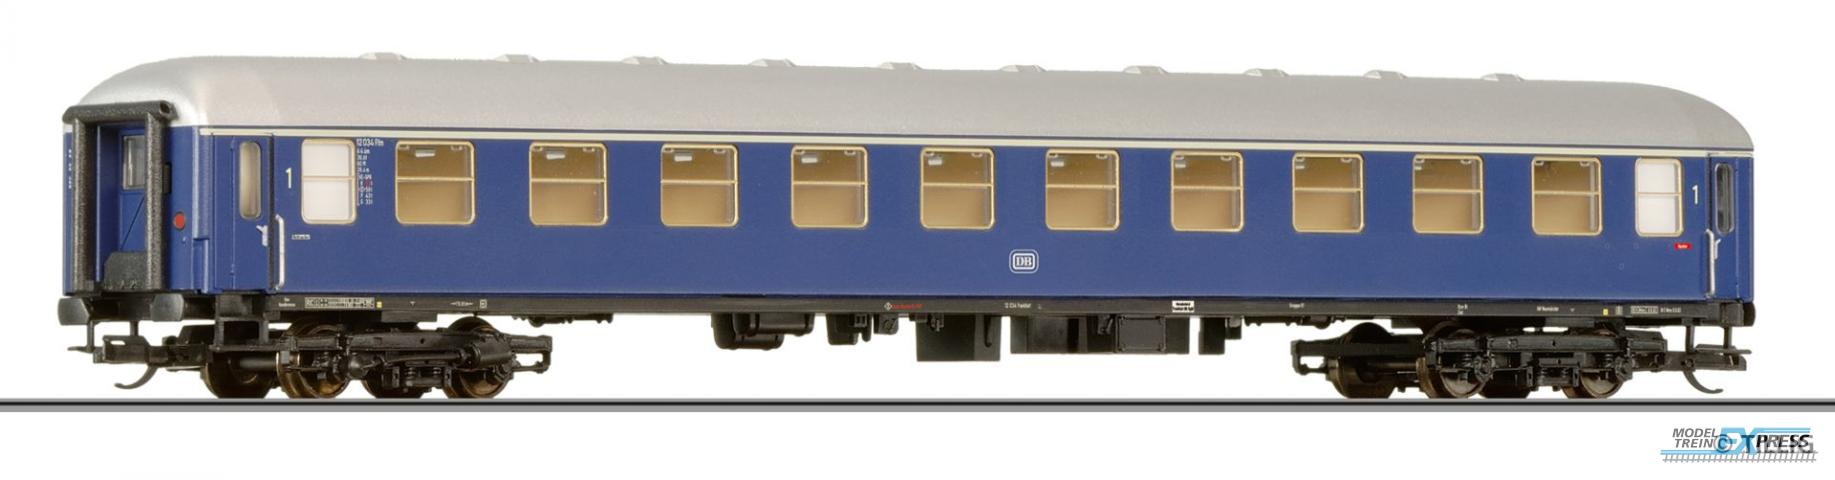 Tillig 16220 Reisezugwagen 1. Klasse A4üm-61 der DB